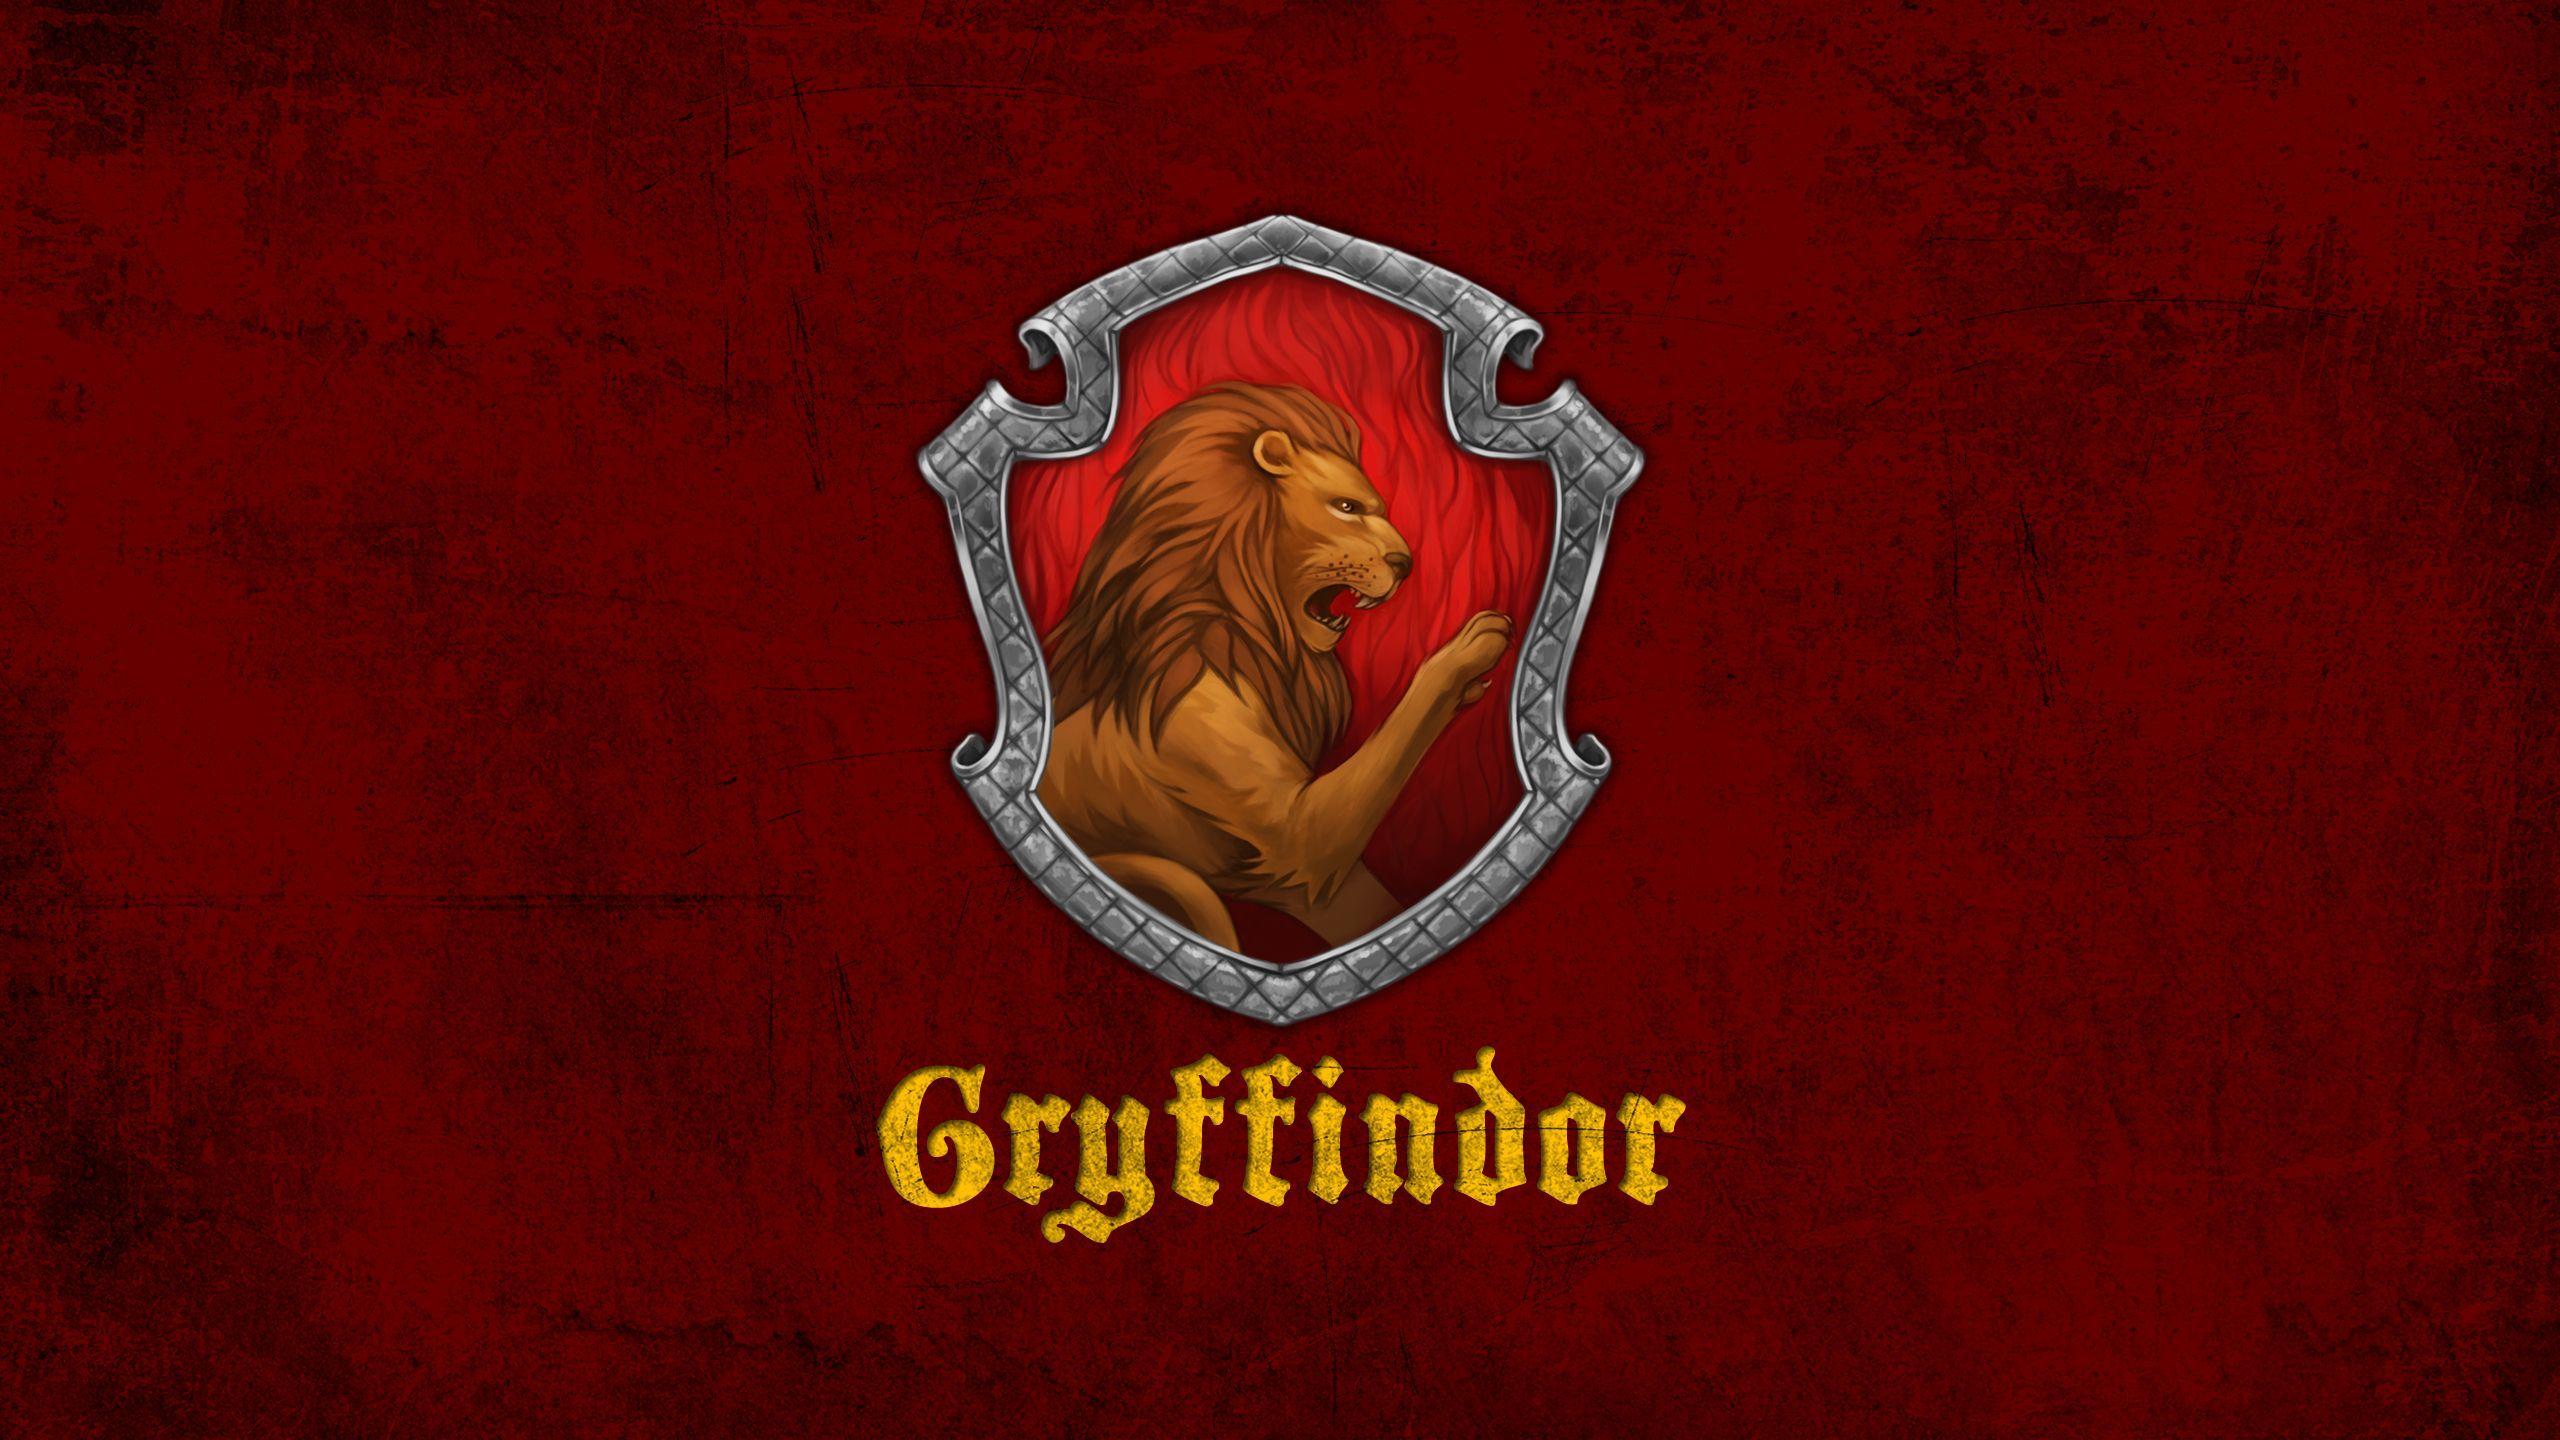 Gryffindor wallpaper by Ninjamonkey03  Download on ZEDGE  1604